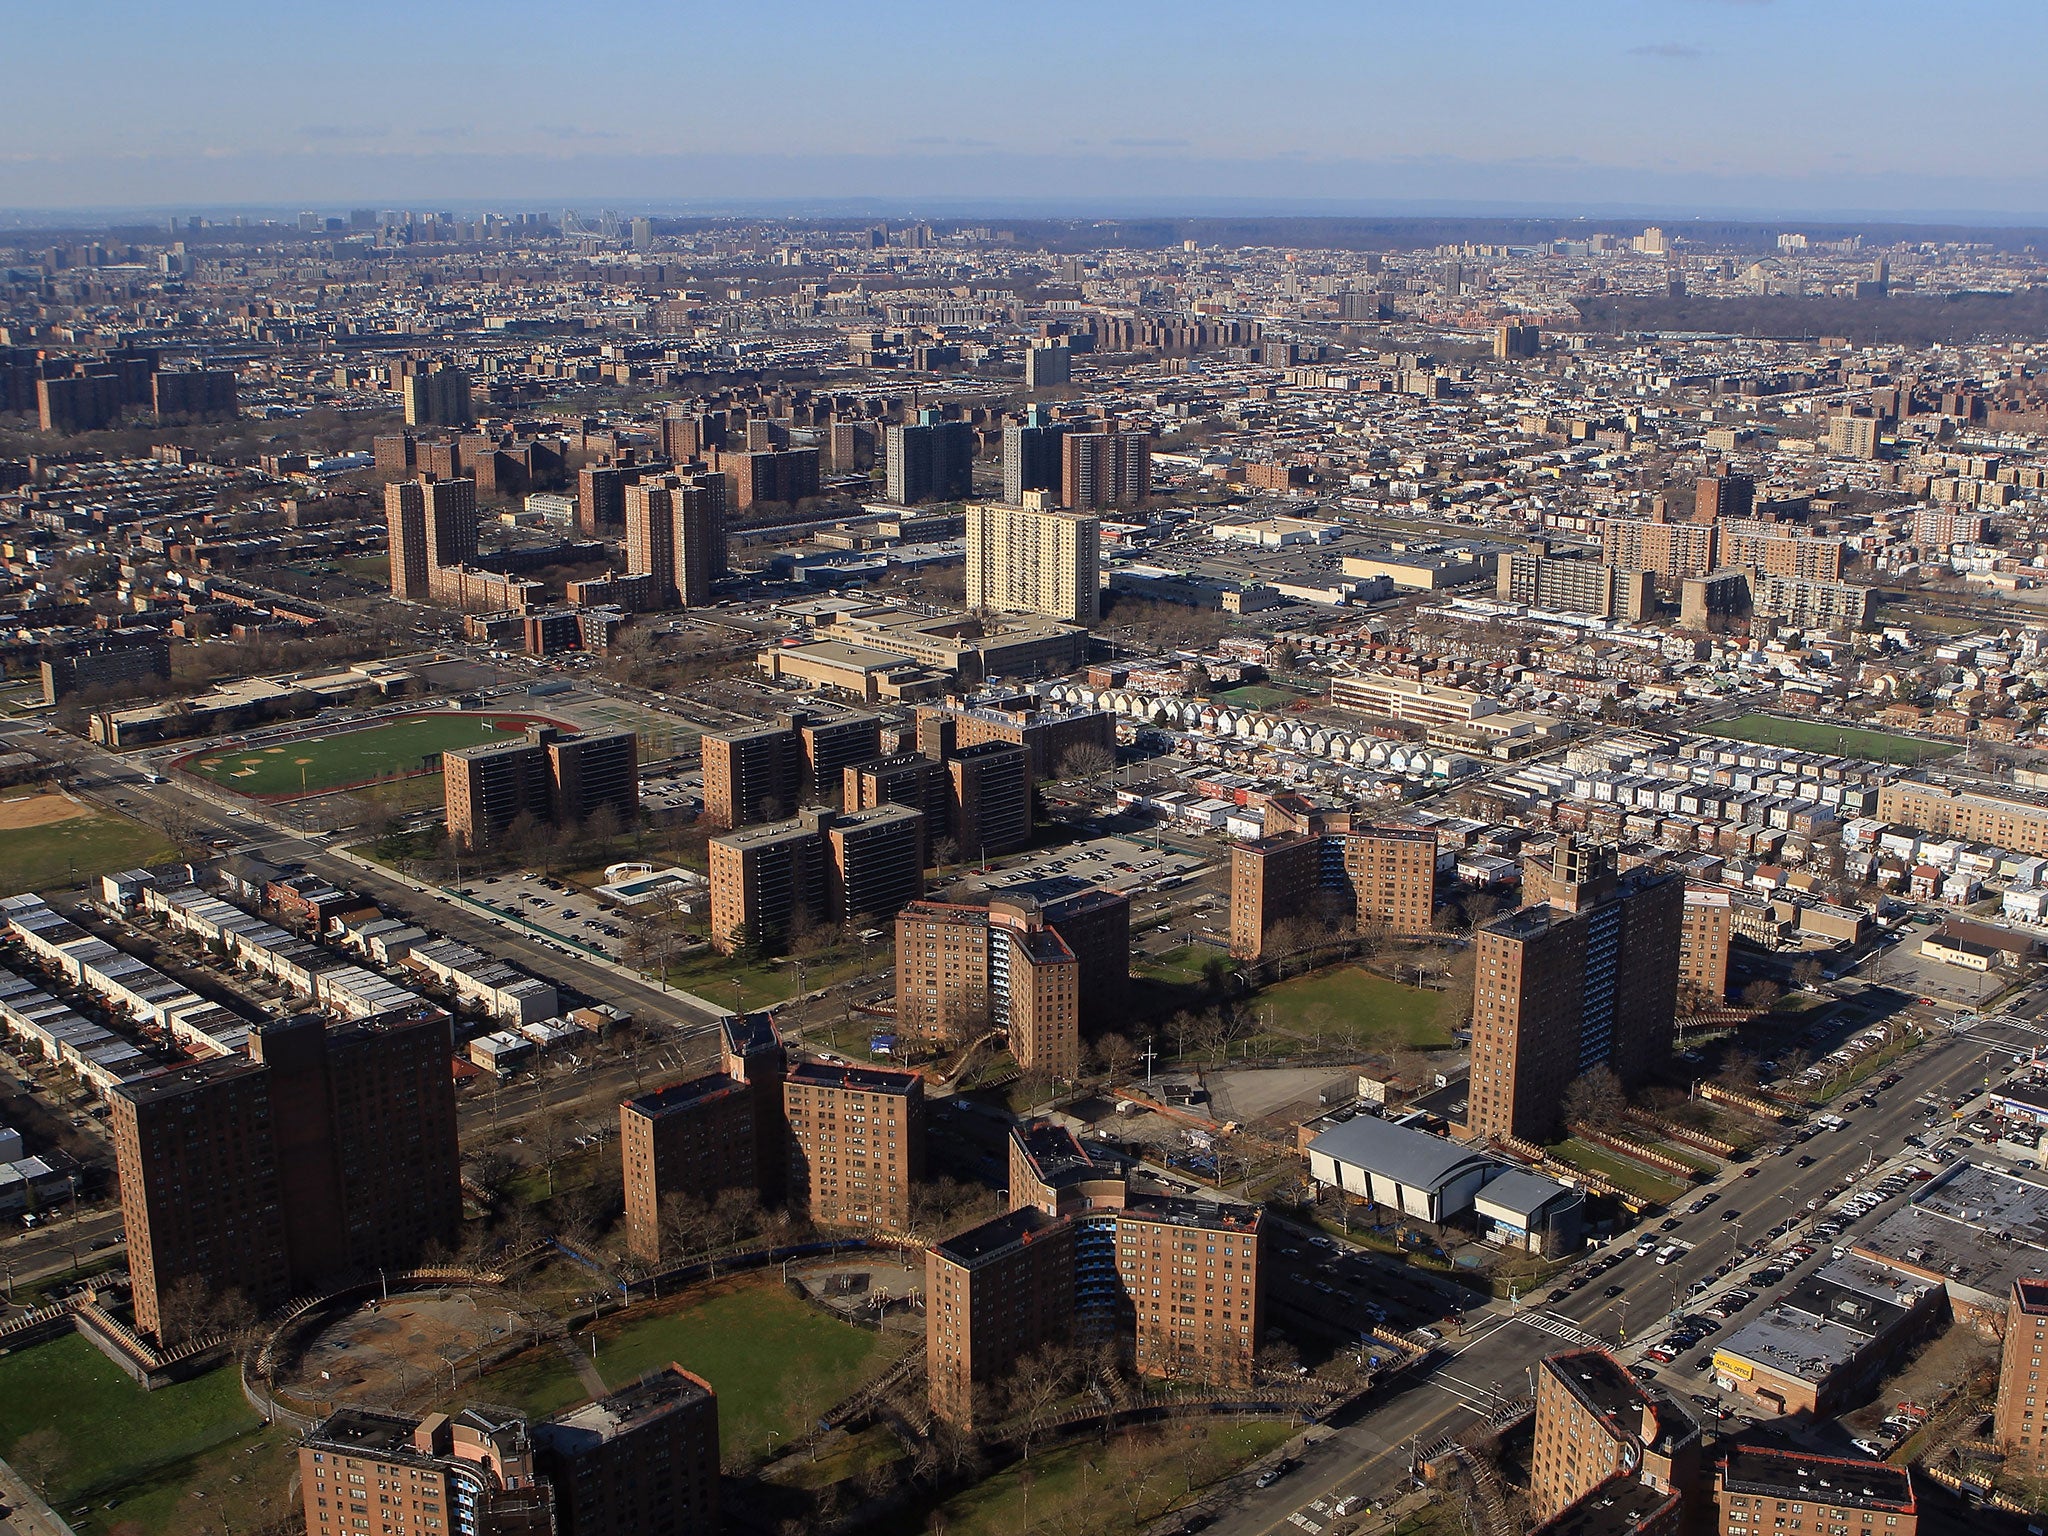 The Bronx, where Legionnaire's disease has broken out